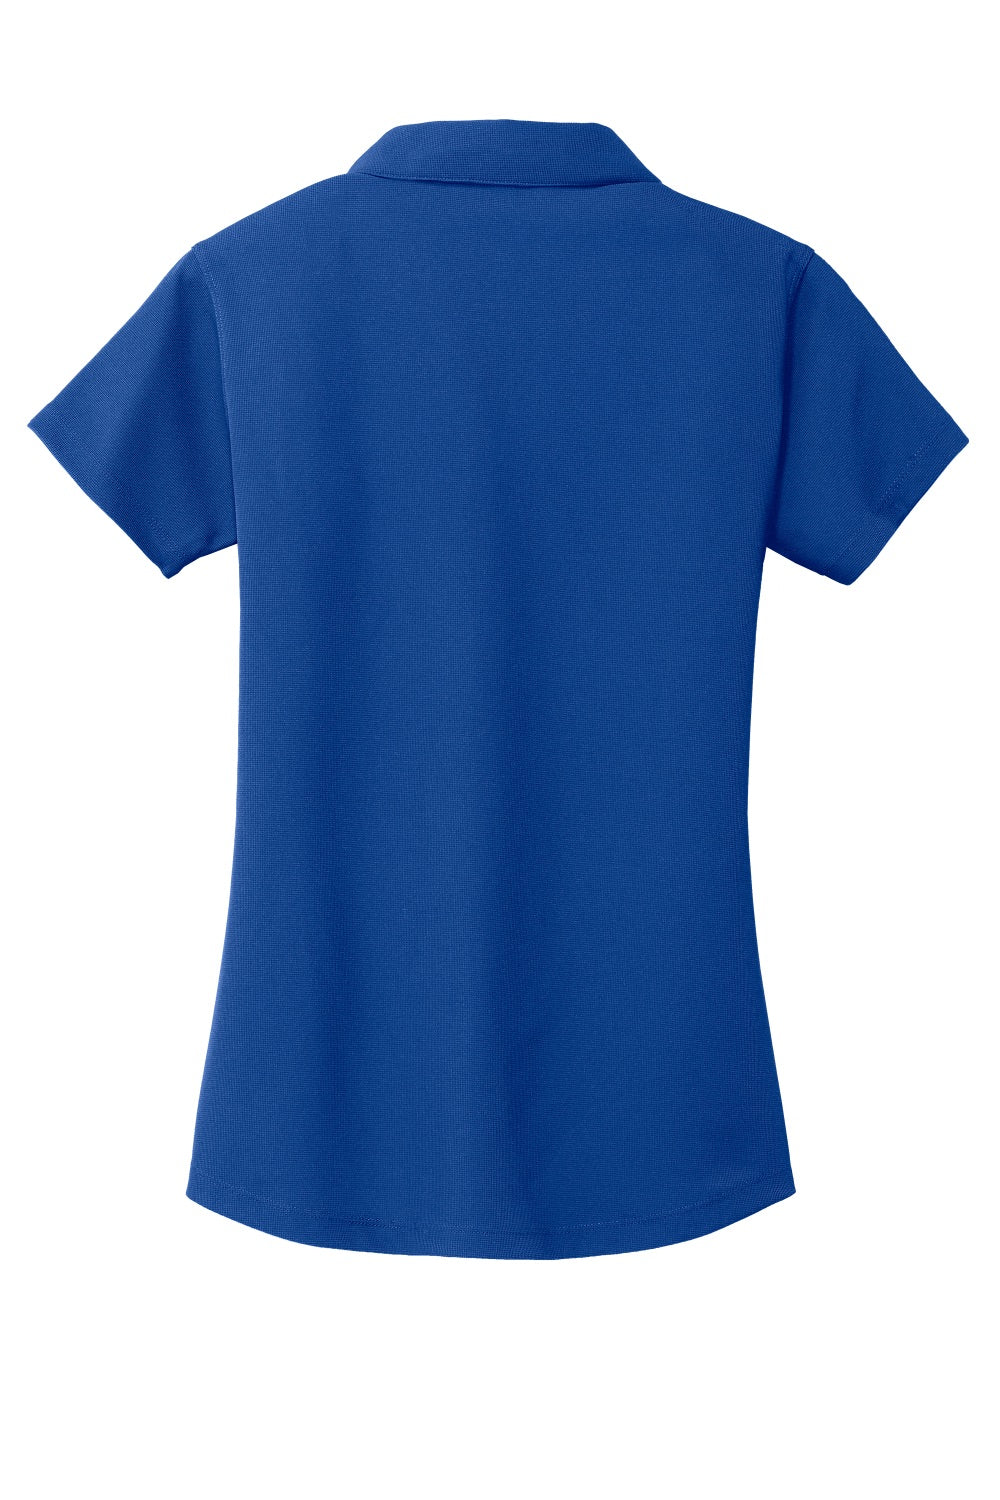 Port Authority L572 Womens Dry Zone Moisture Wicking Short Sleeve Polo Shirt True Royal Blue Flat Back